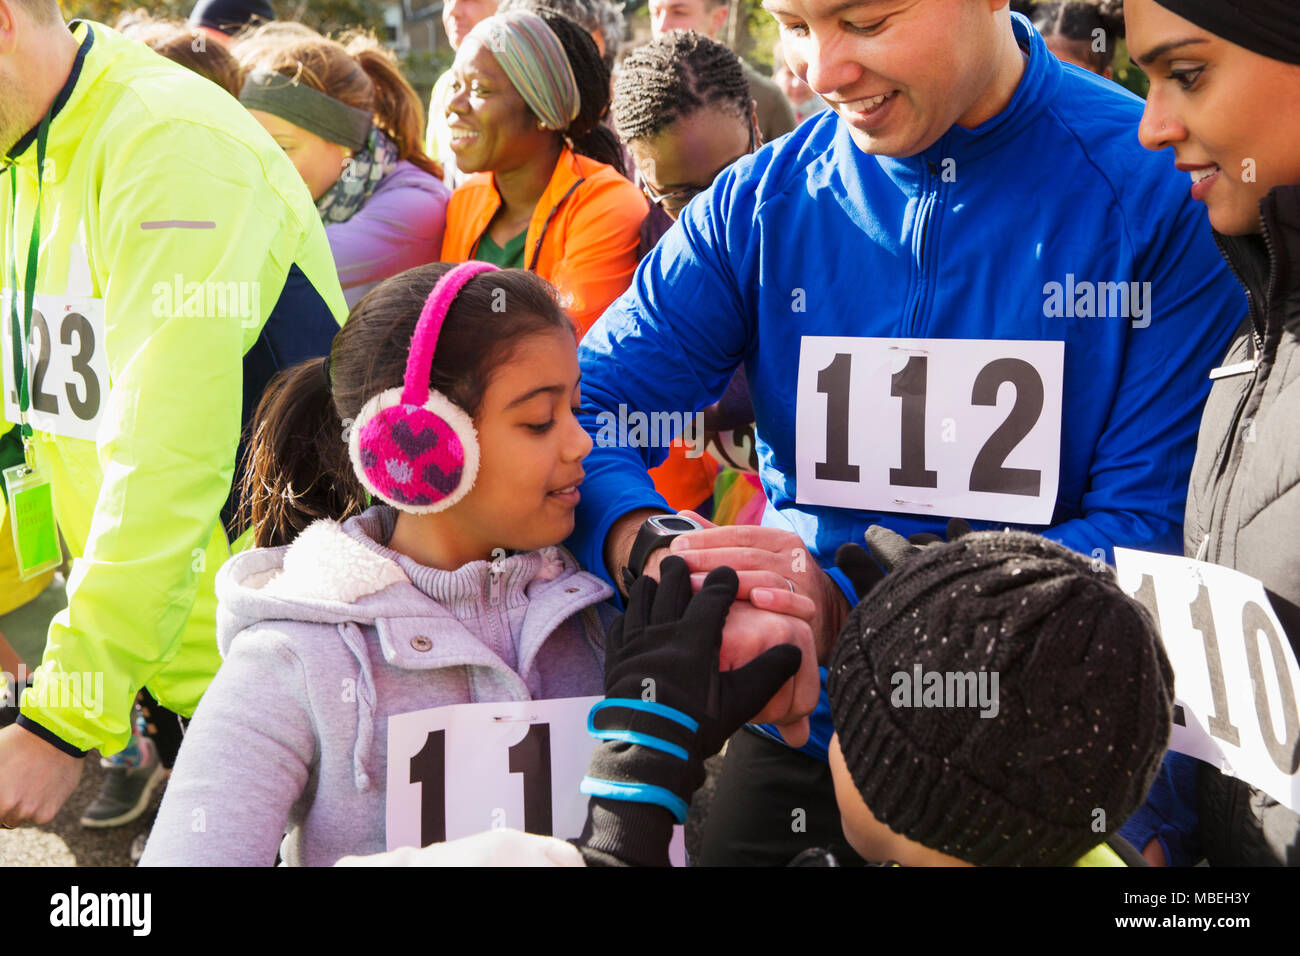 Family runners checking smart watch at charity run starting line Stock Photo